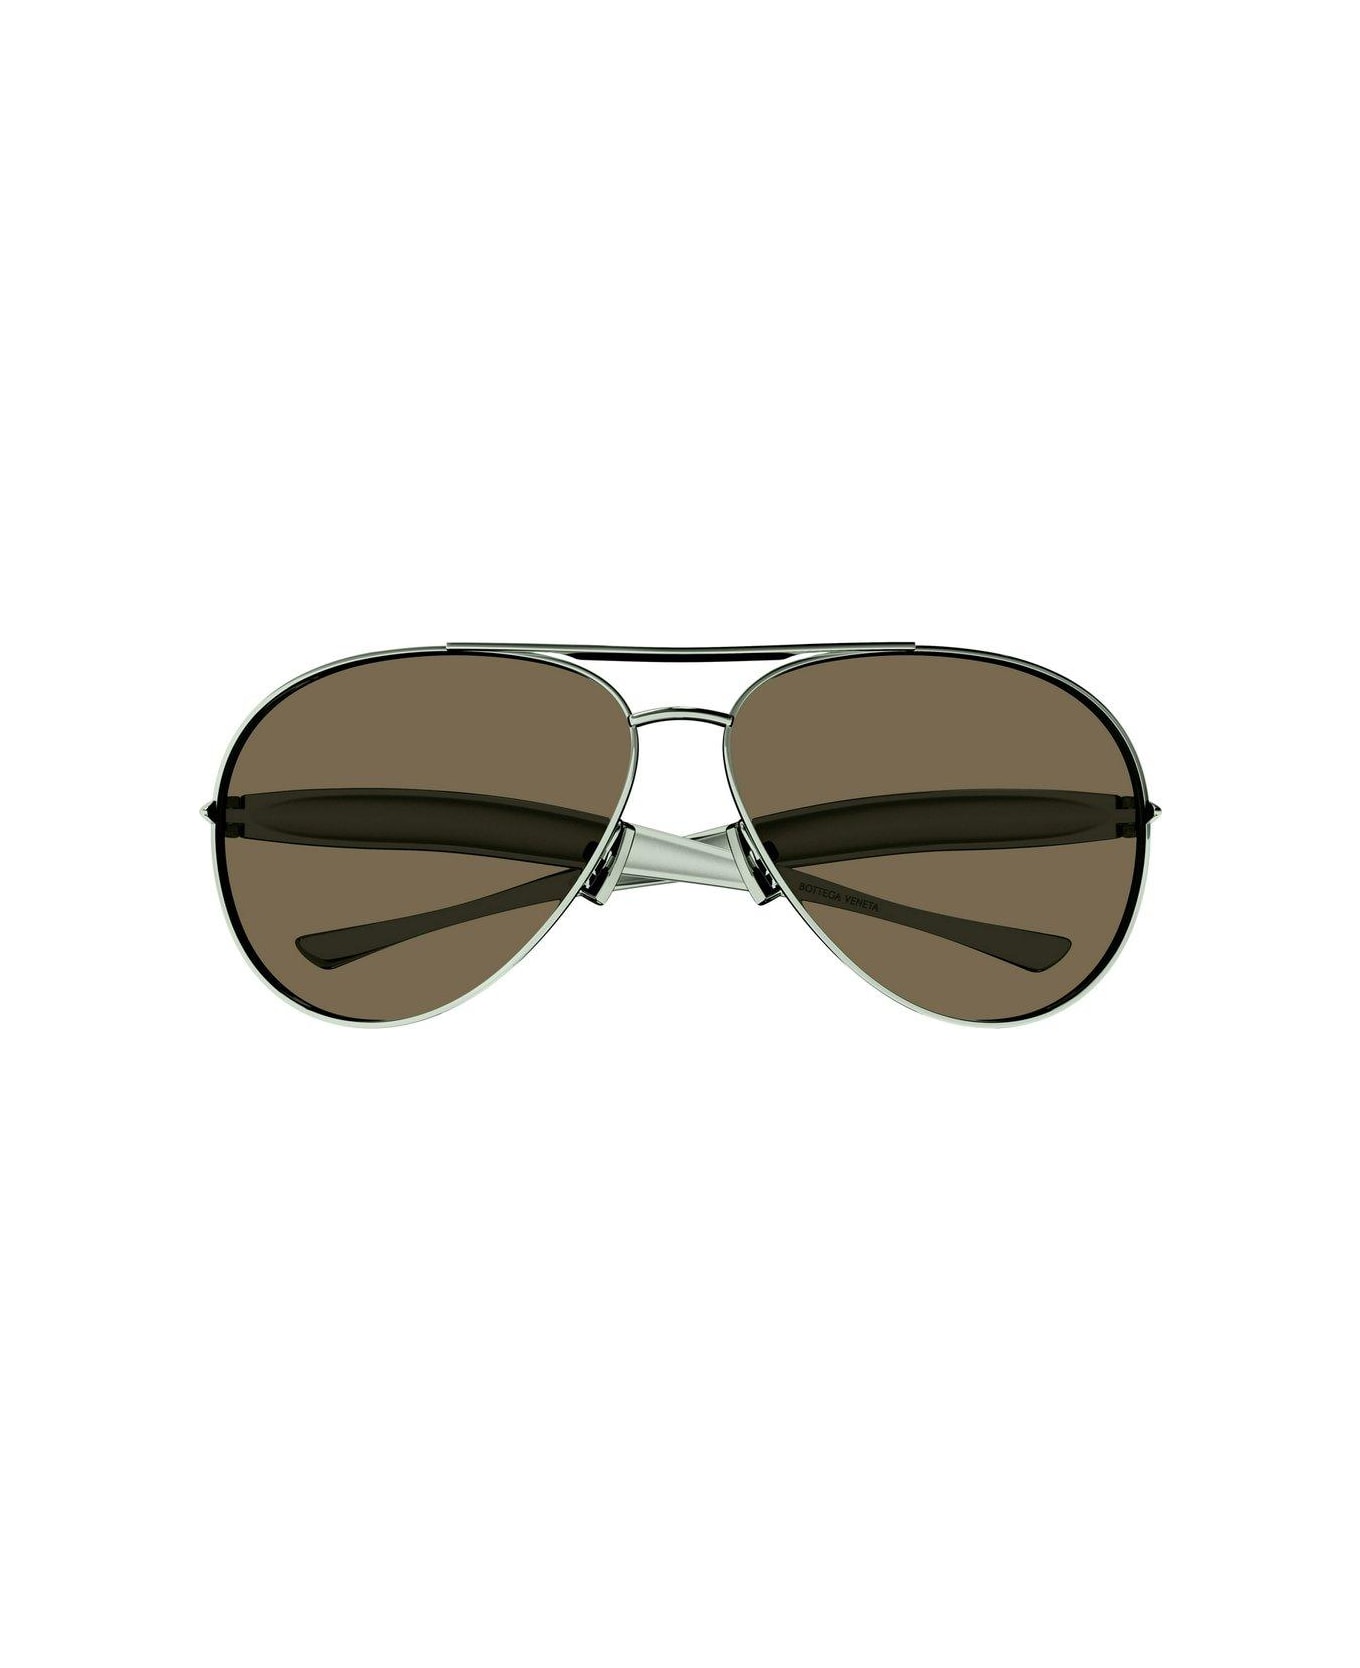 Bottega Veneta Aviator Frame Sunglasses - Green brown